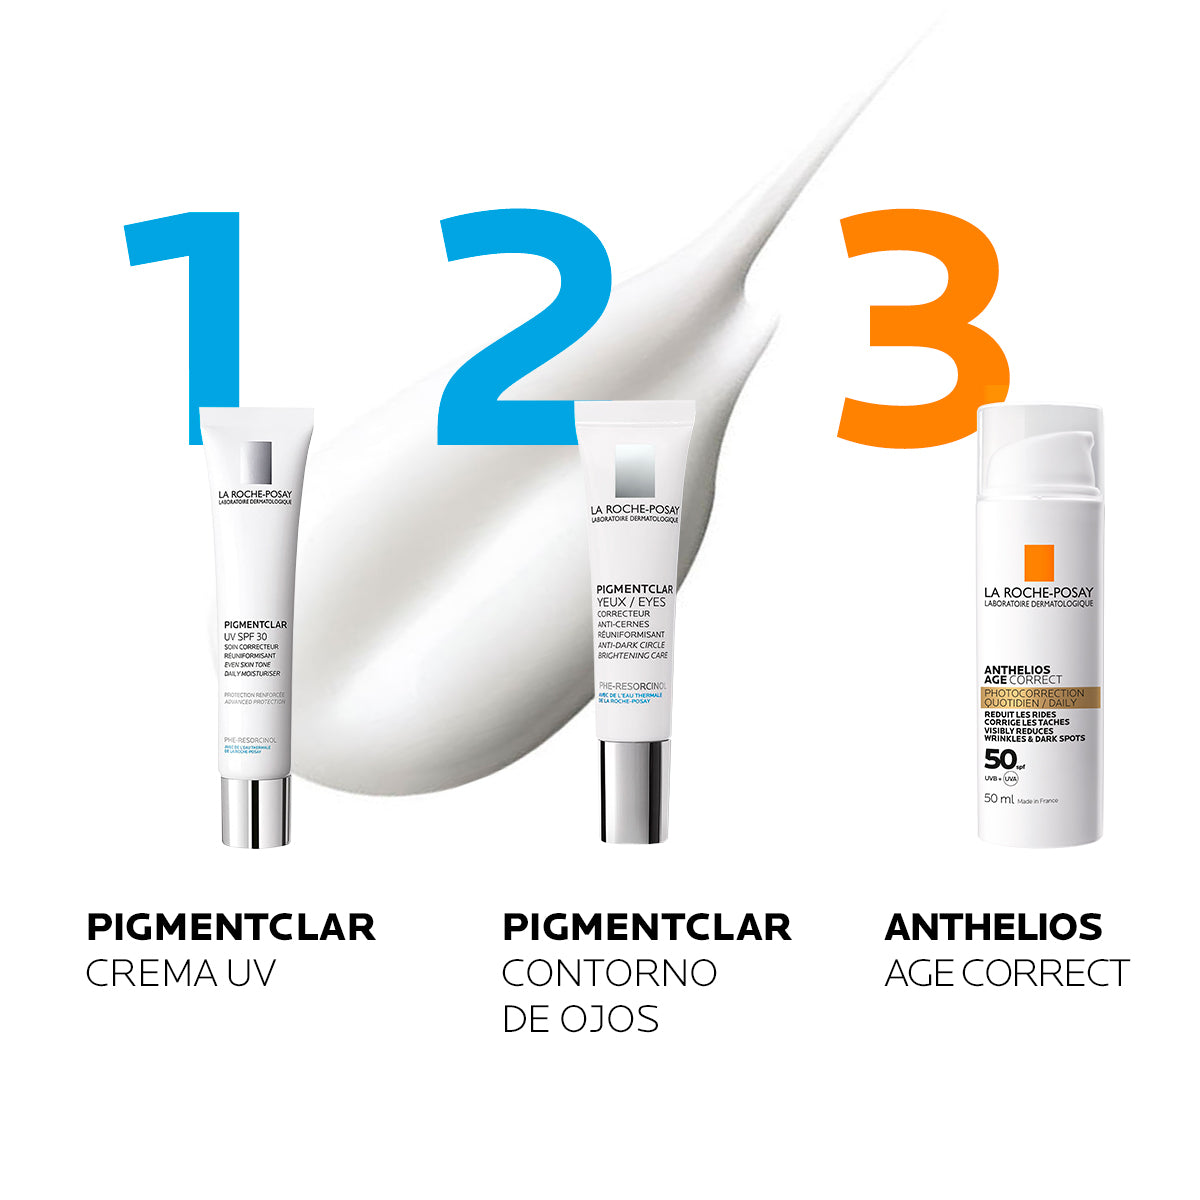 La Roche Posay Pigmentclar UV FPS30, Crema hidratante anti-manchas con protector solar, 40ml